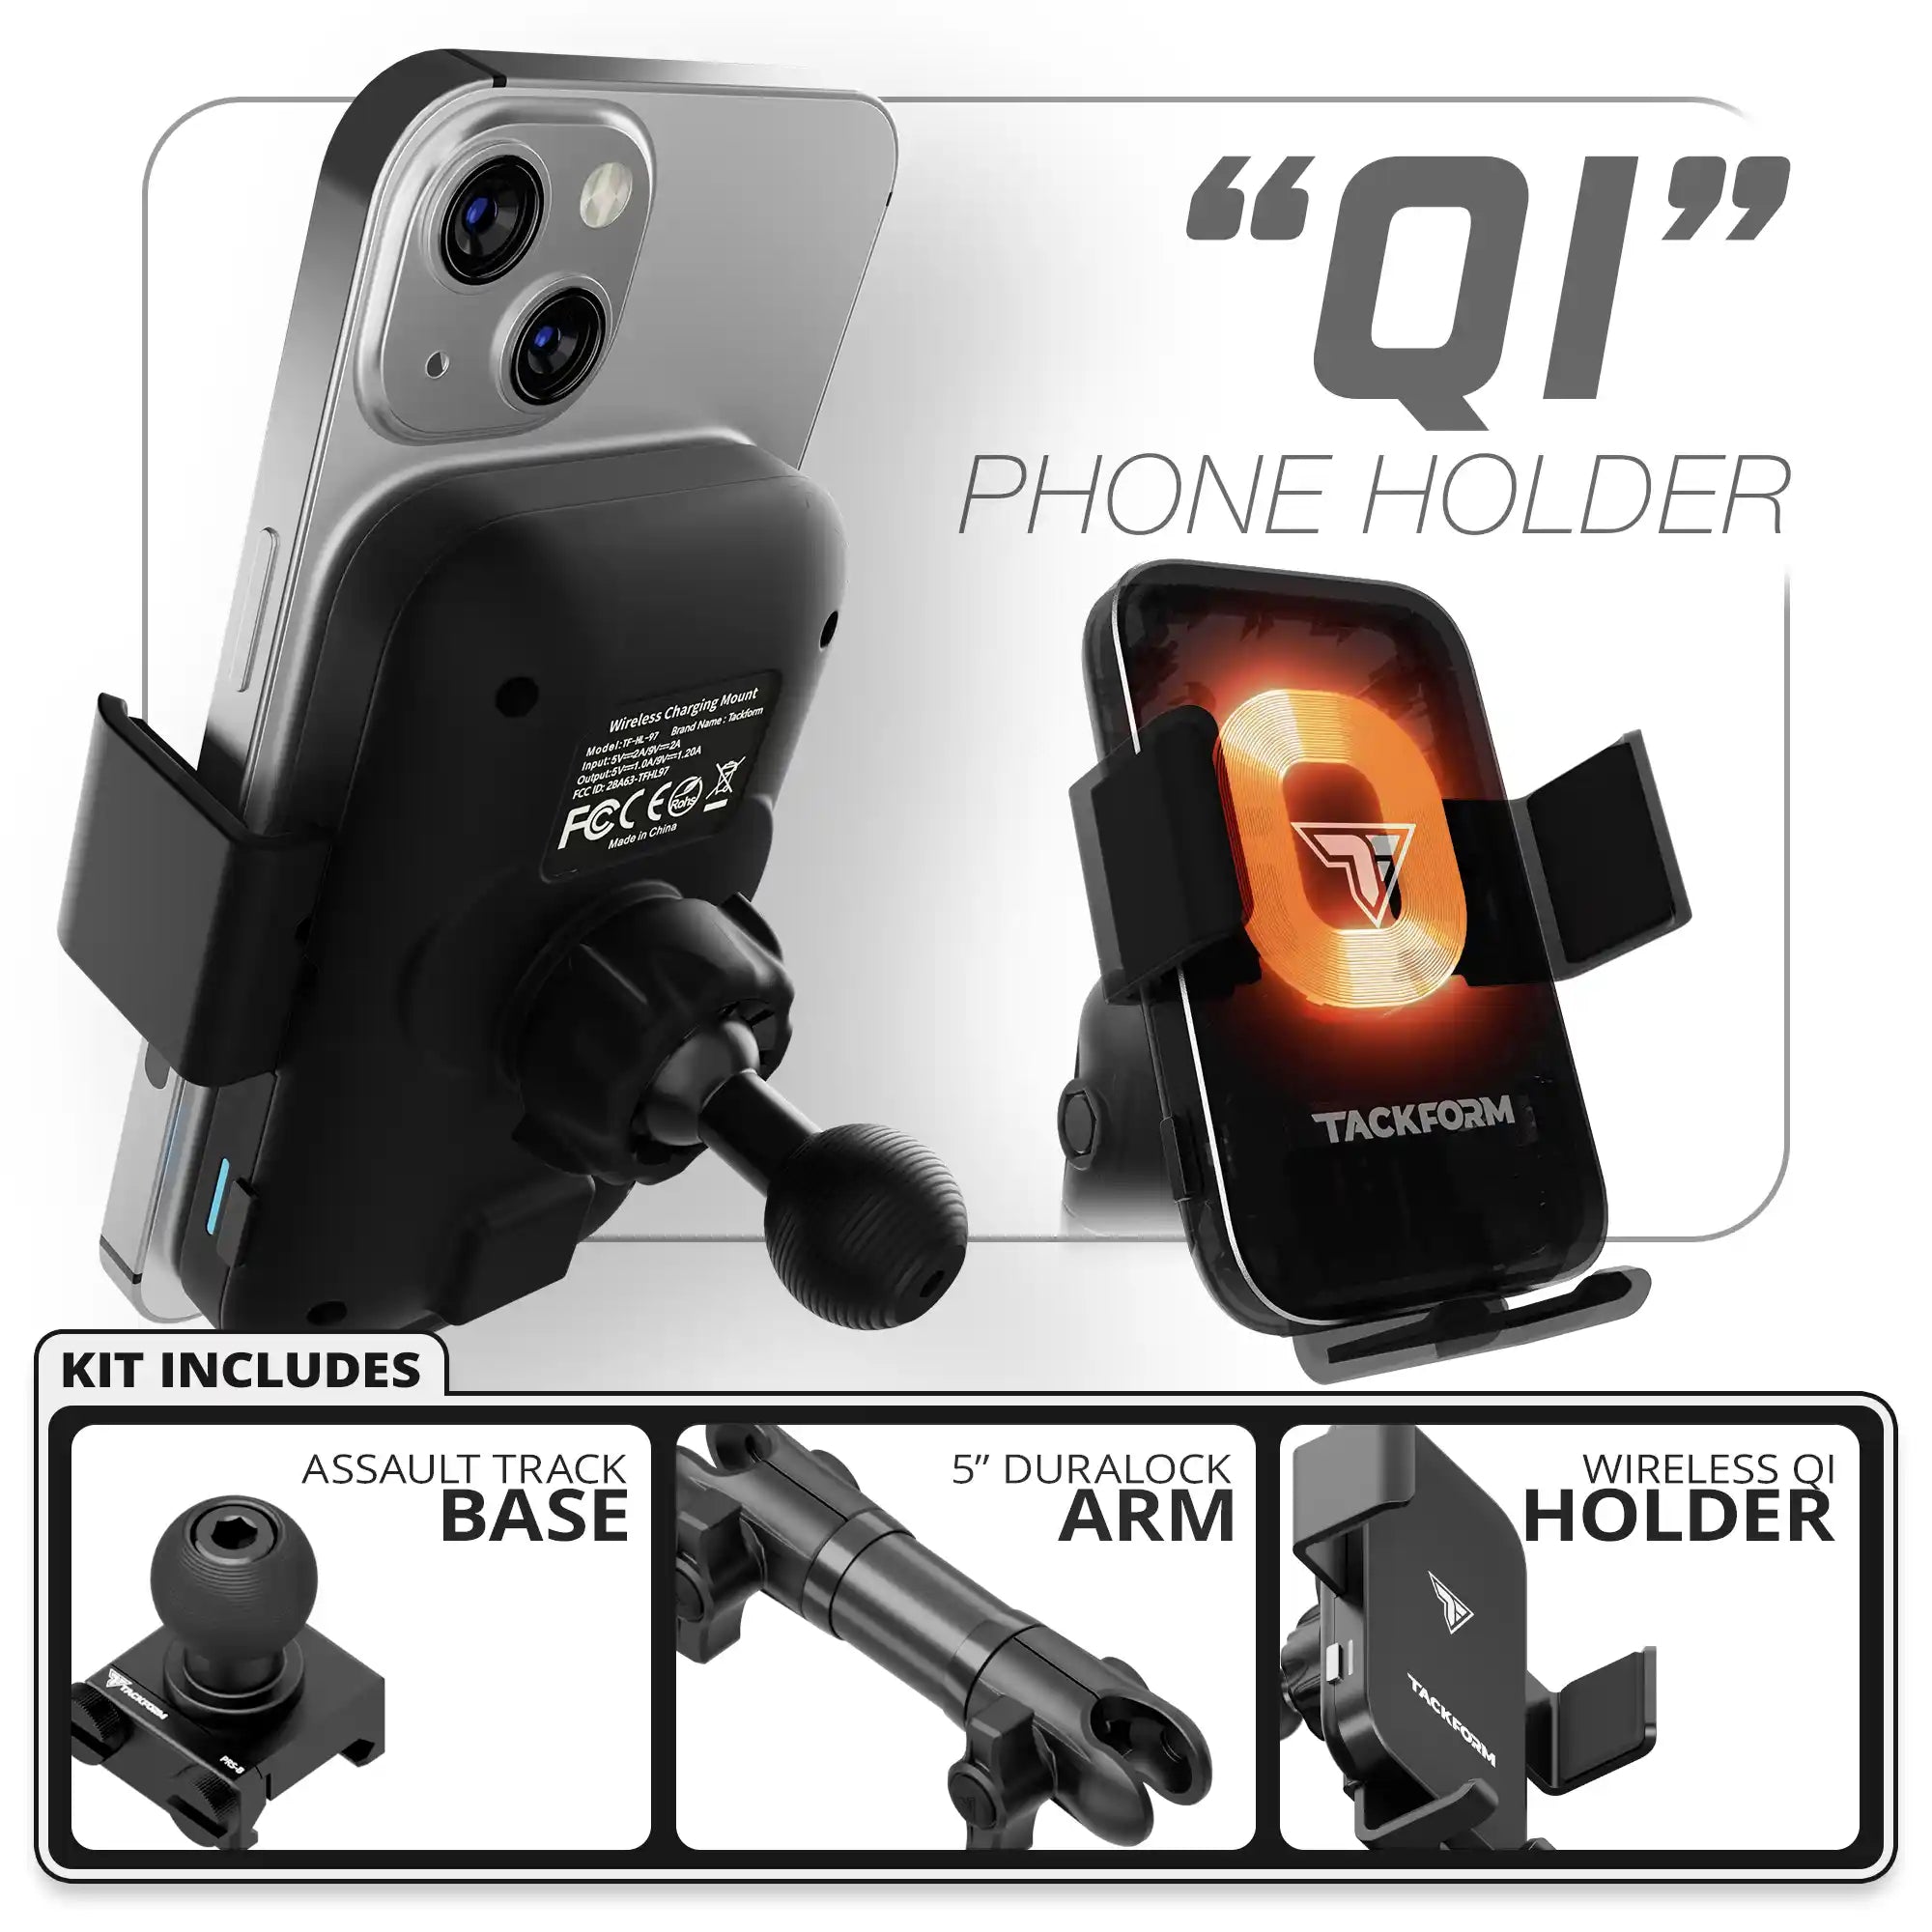 Wireless Charging Phone Holder | Assault Track Base | 5" DuraLock Arm